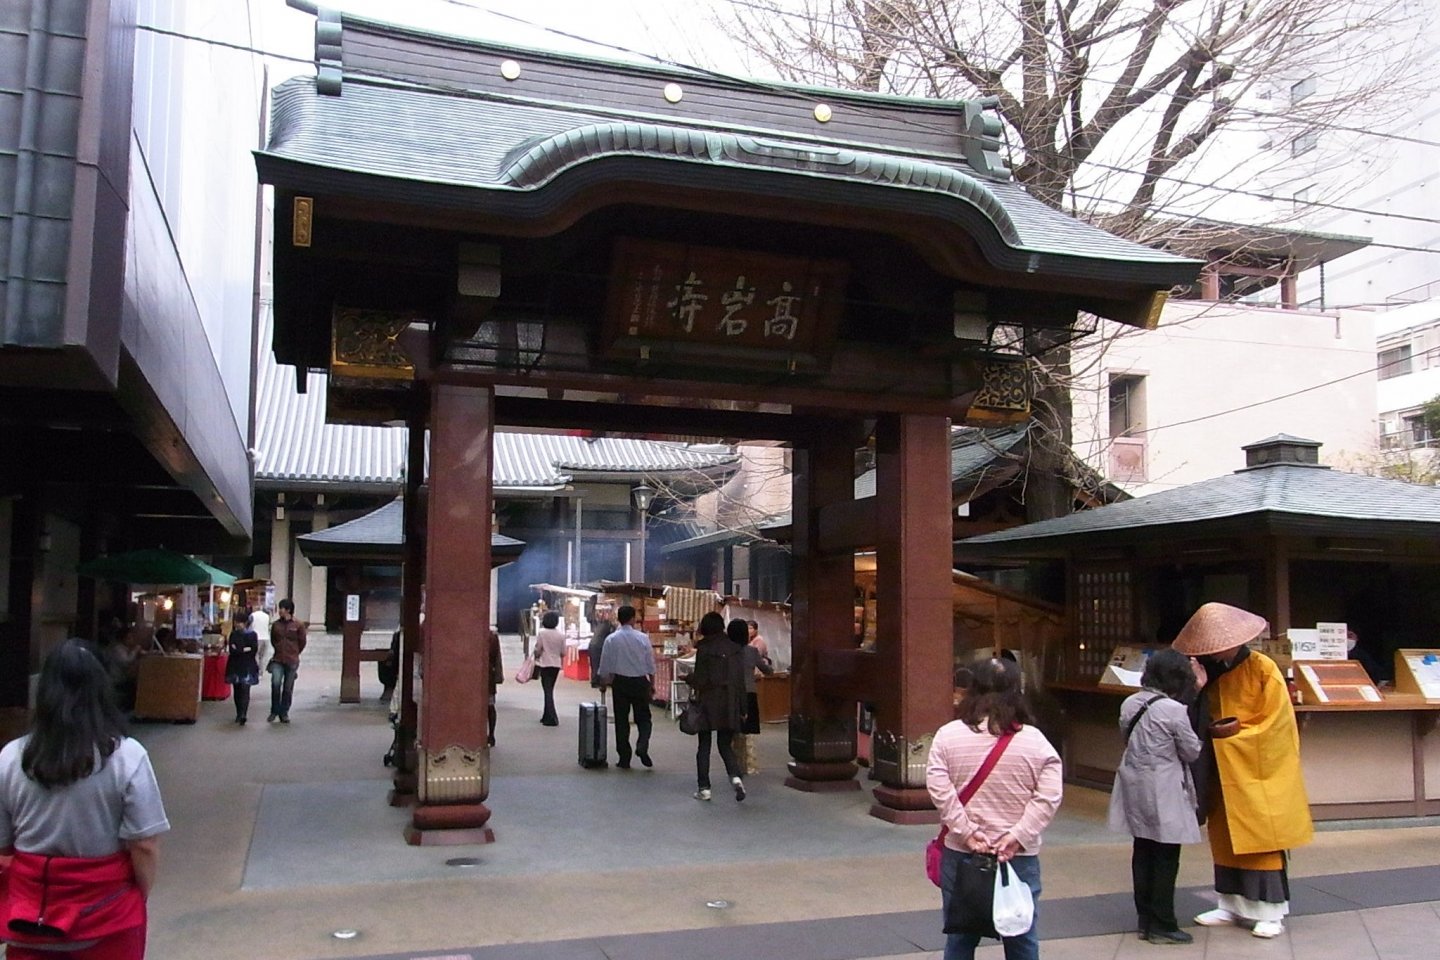 The gate to Koganji Temple